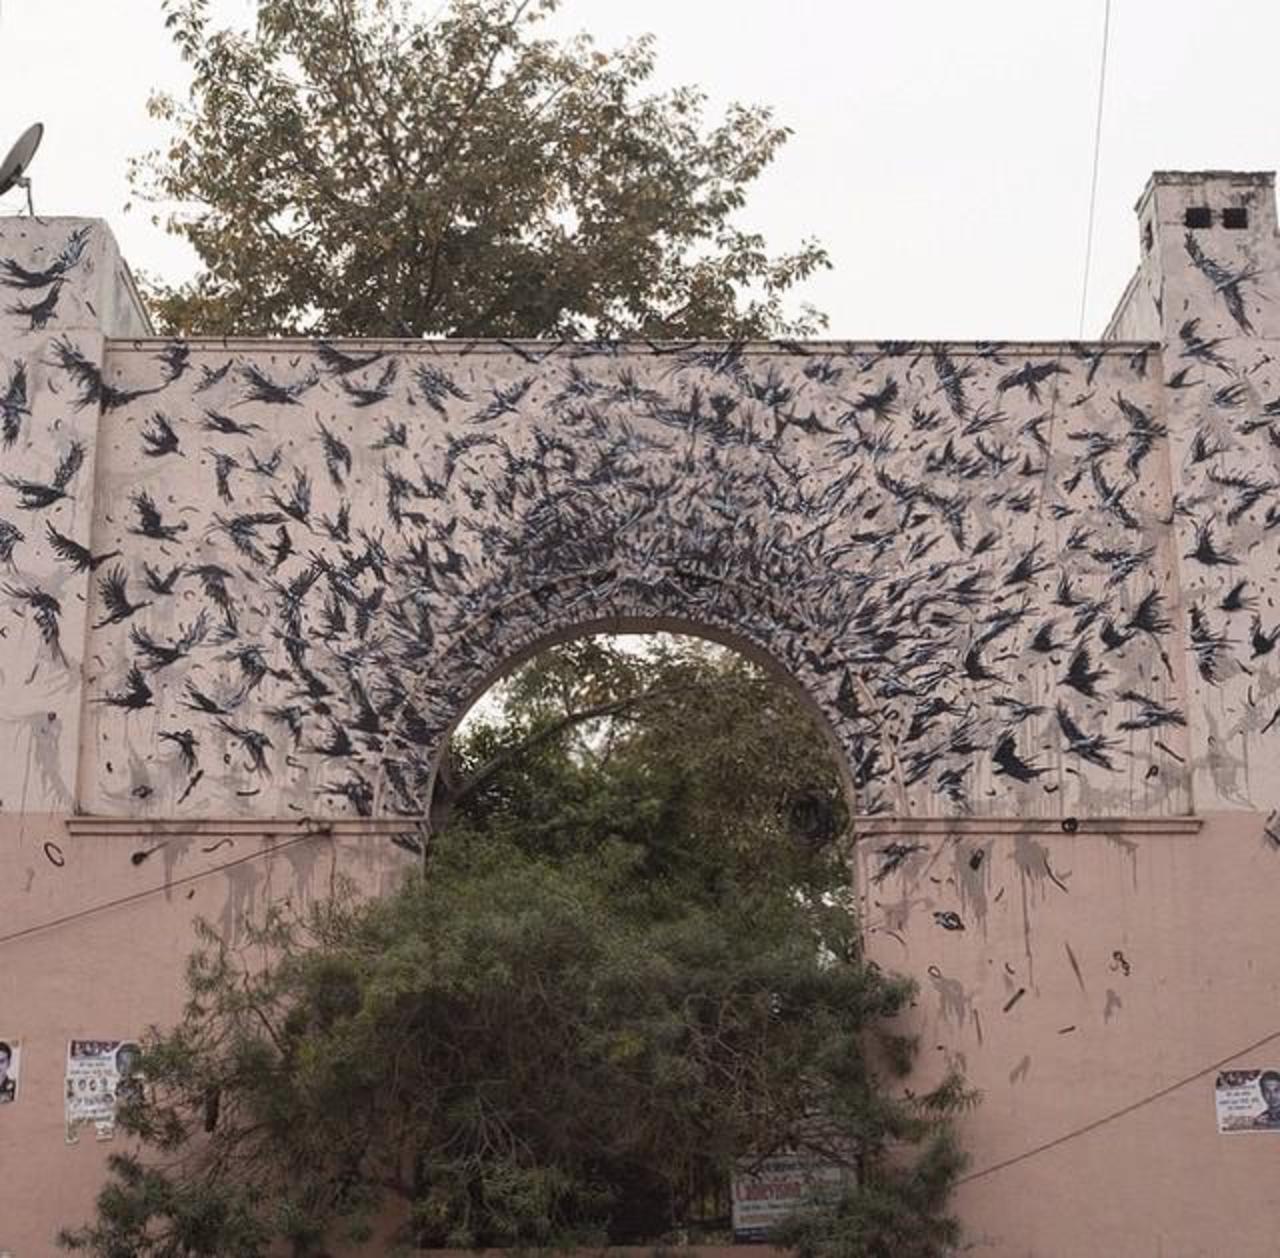 When Street Art meets Nature by DALeast in Delhi, India 

#art #arte #graffiti #streetart http://t.co/AqgDKCGQI7